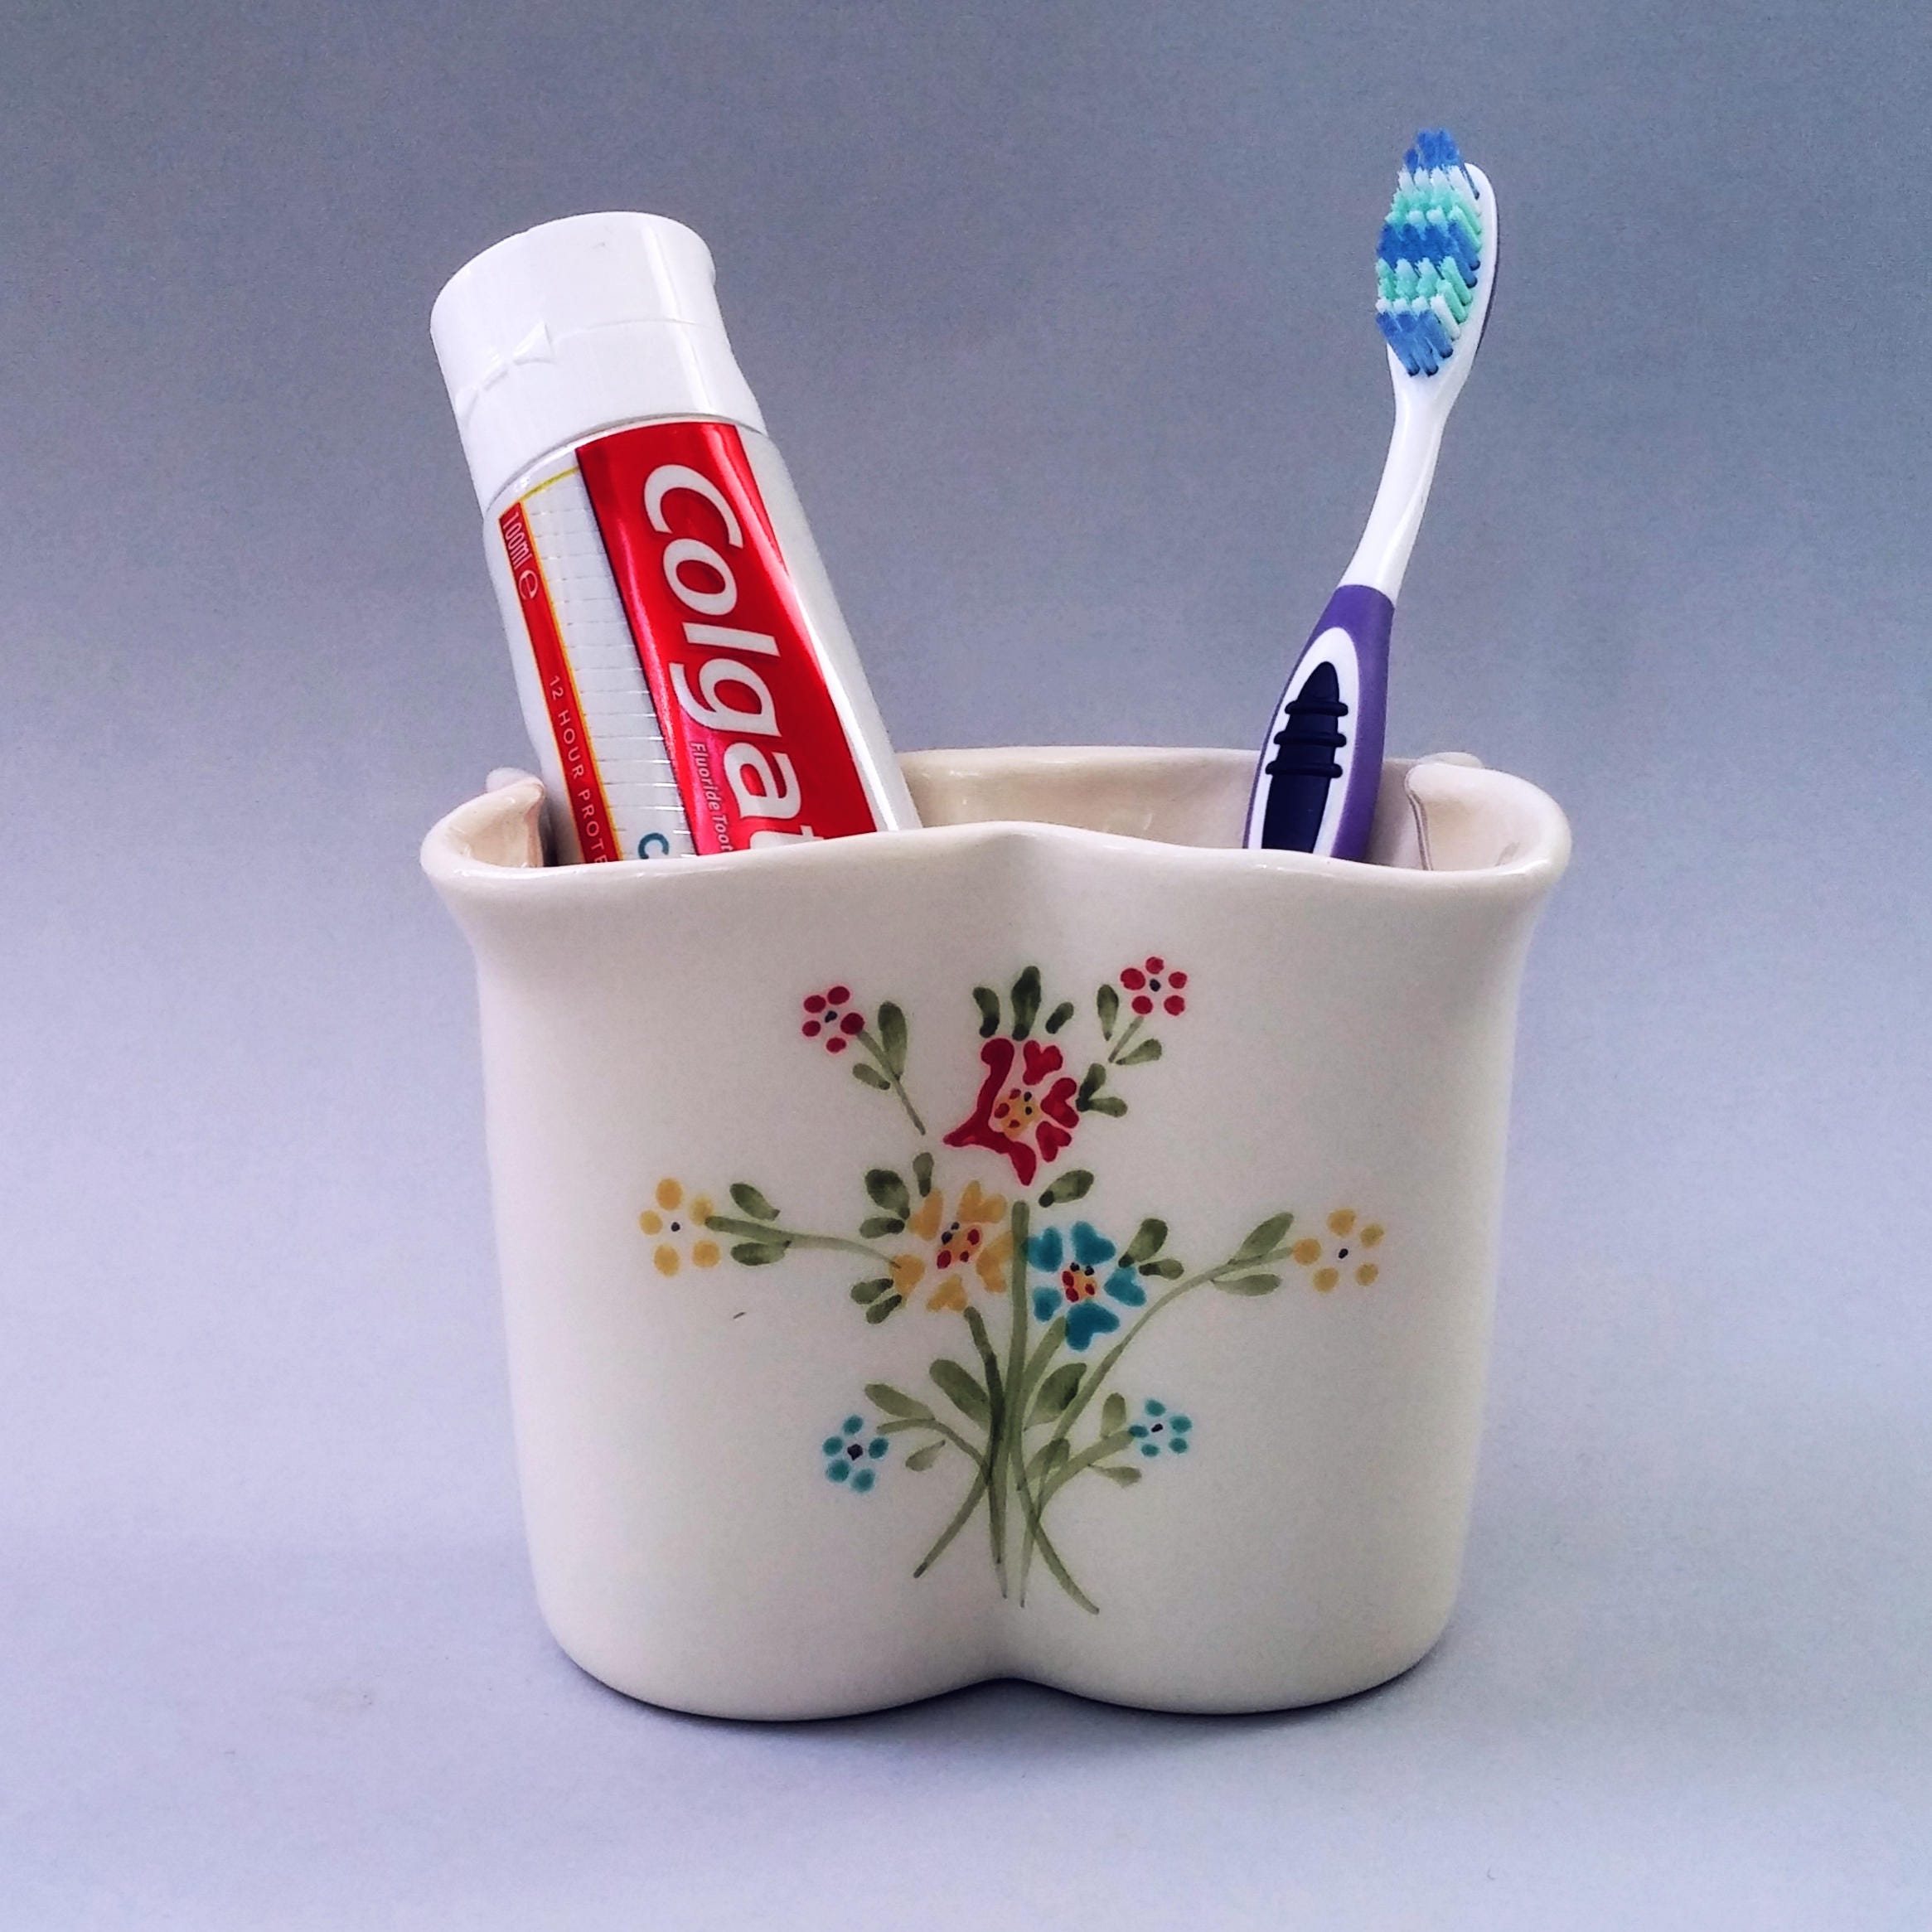 Round Ceramic Toothbrush Holder & Toothpaste Holder / Bathroom Organiser  Mini